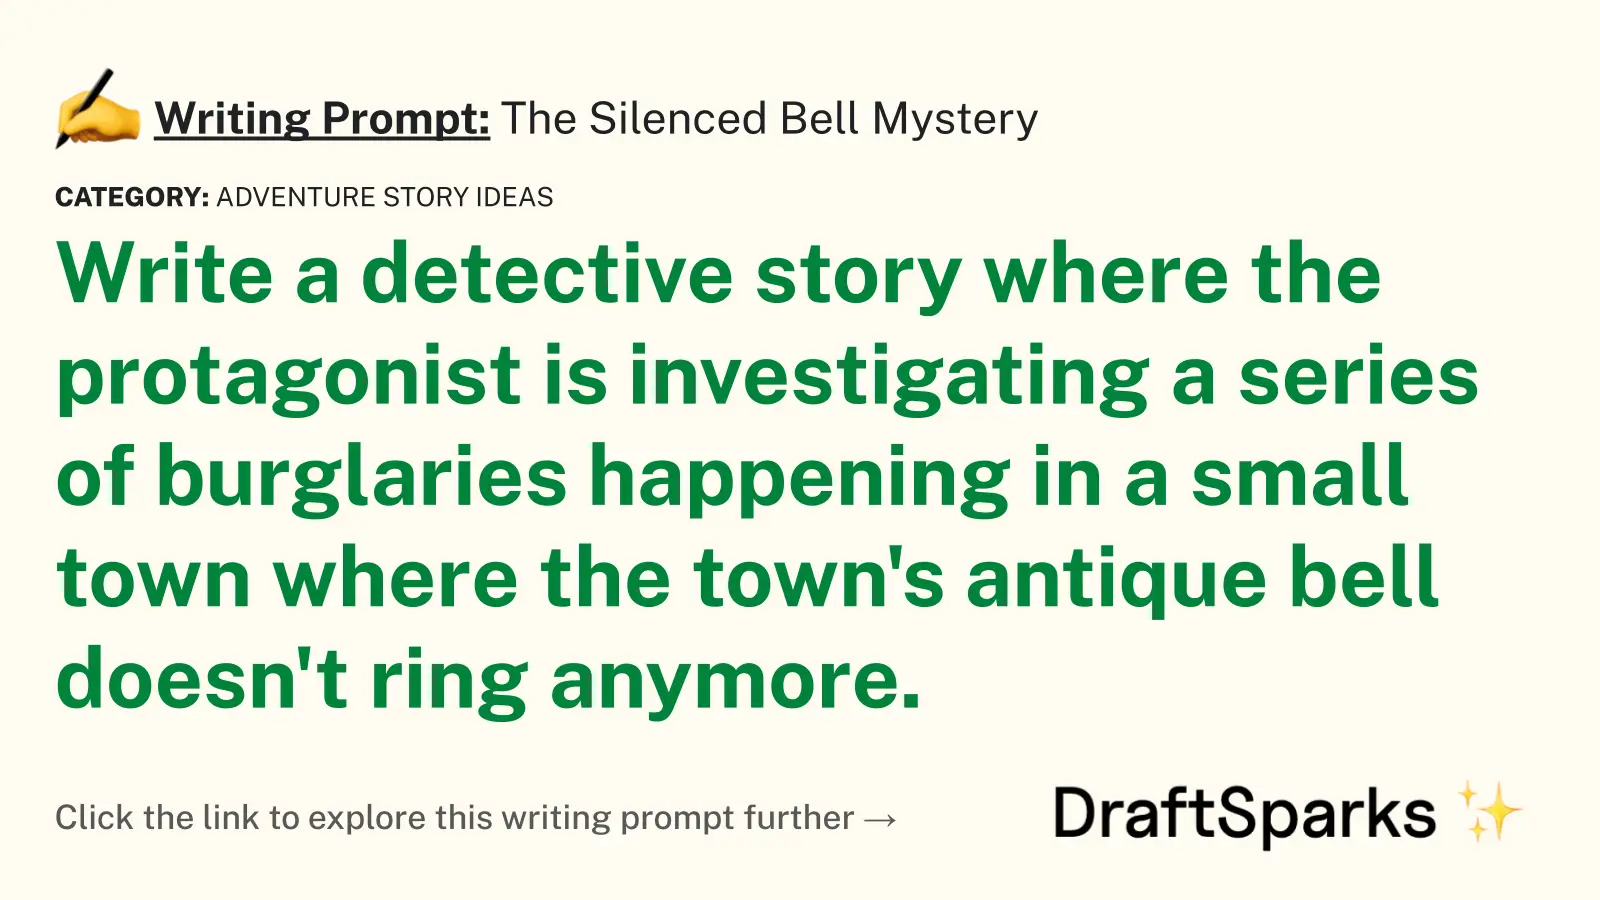 The Silenced Bell Mystery